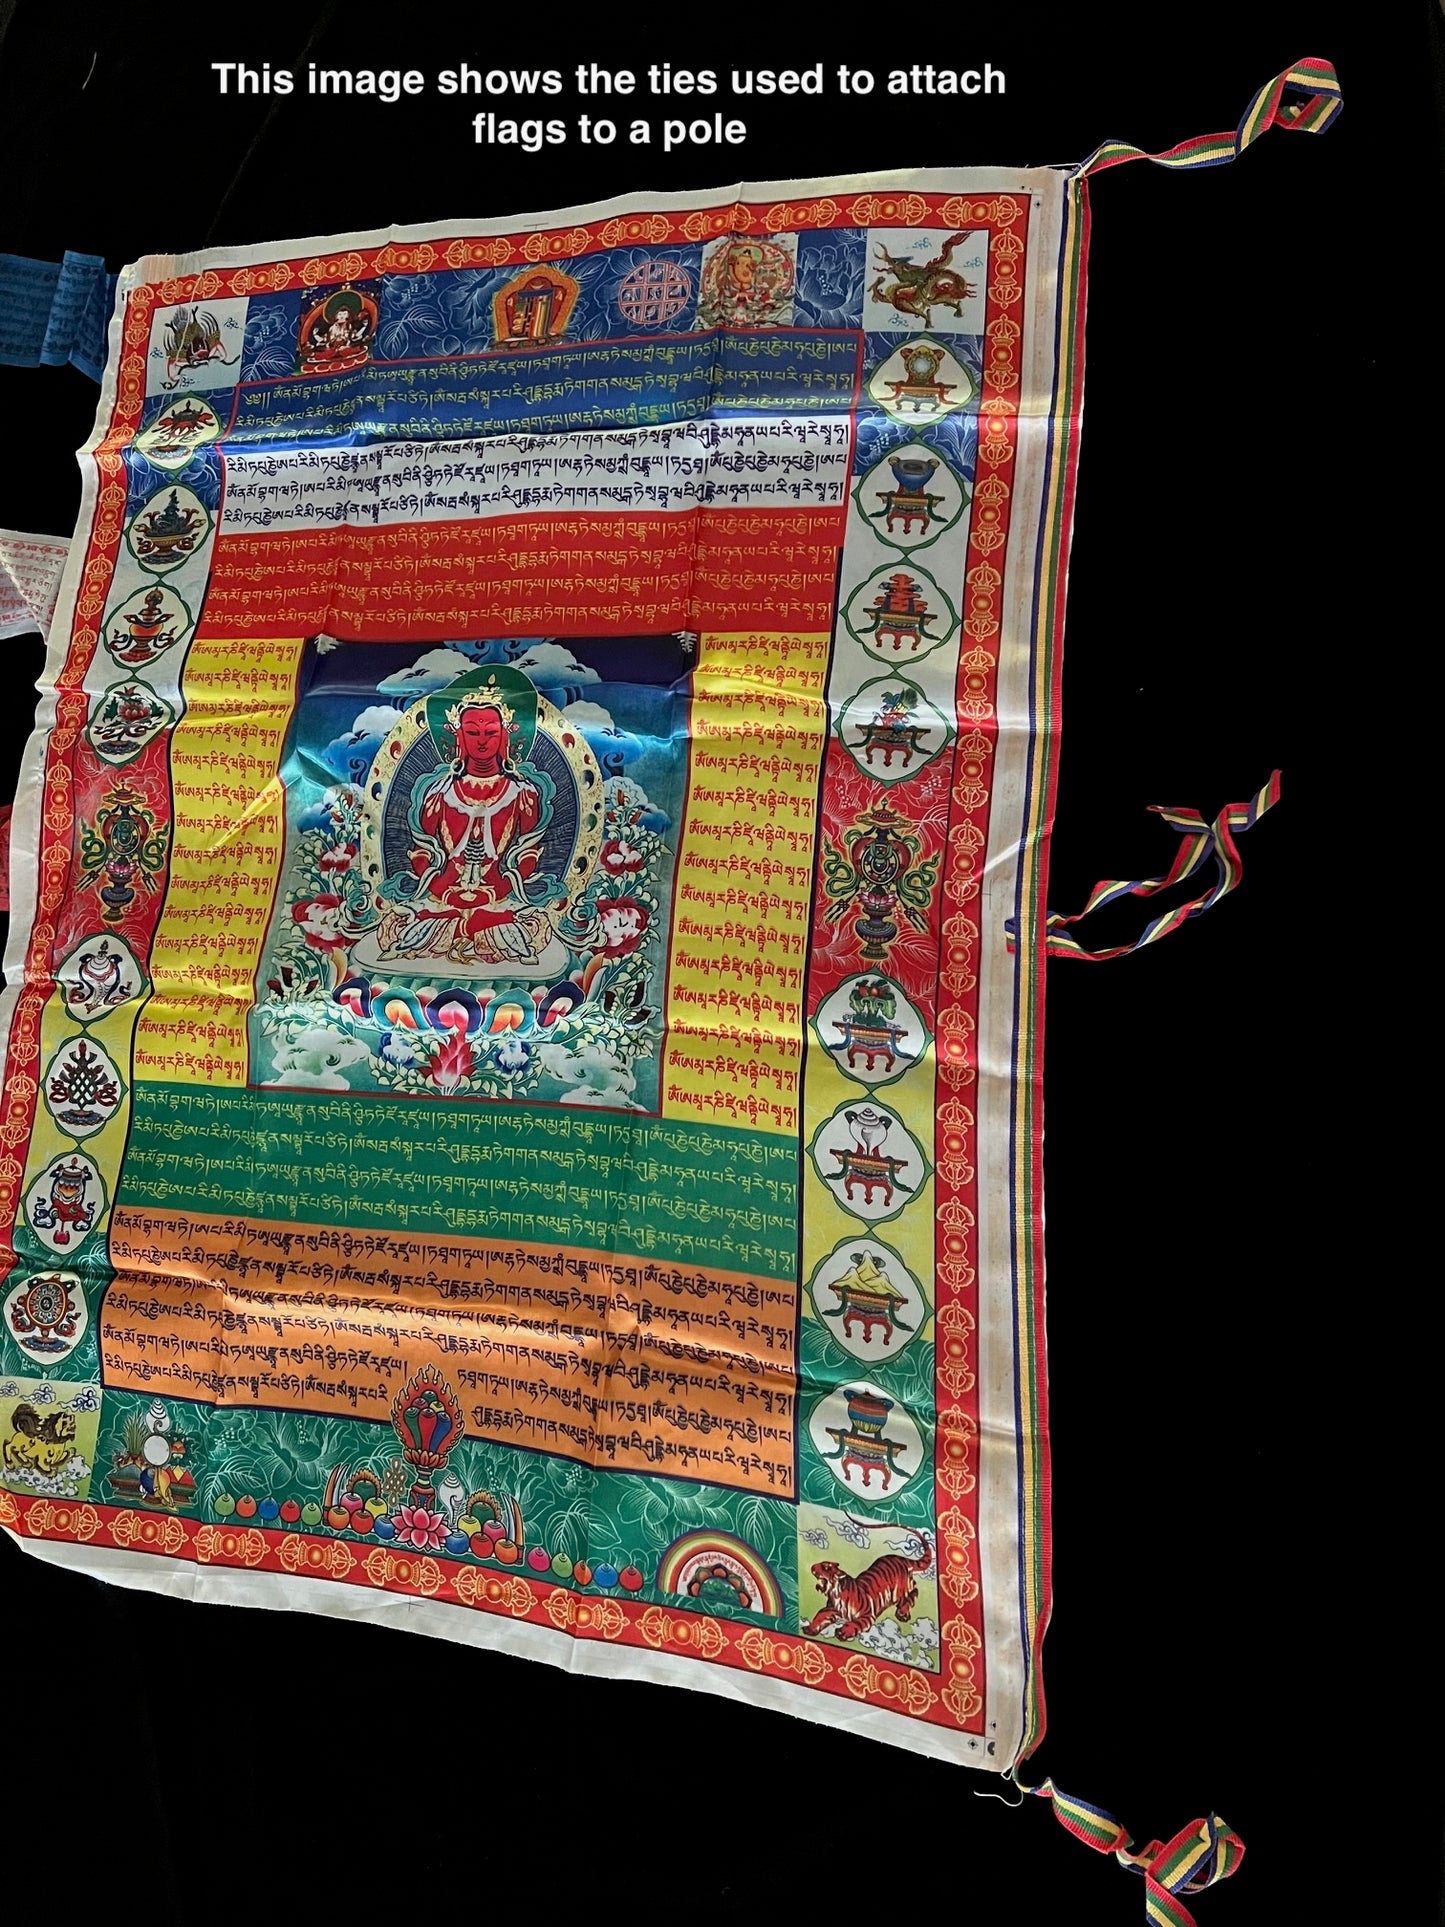 Huge Chenrezig Prayer Flag Banner |Tibetan Prayer Flags | 27in x 36in | 1 single flag | Poly Silk | vertical flag or wall